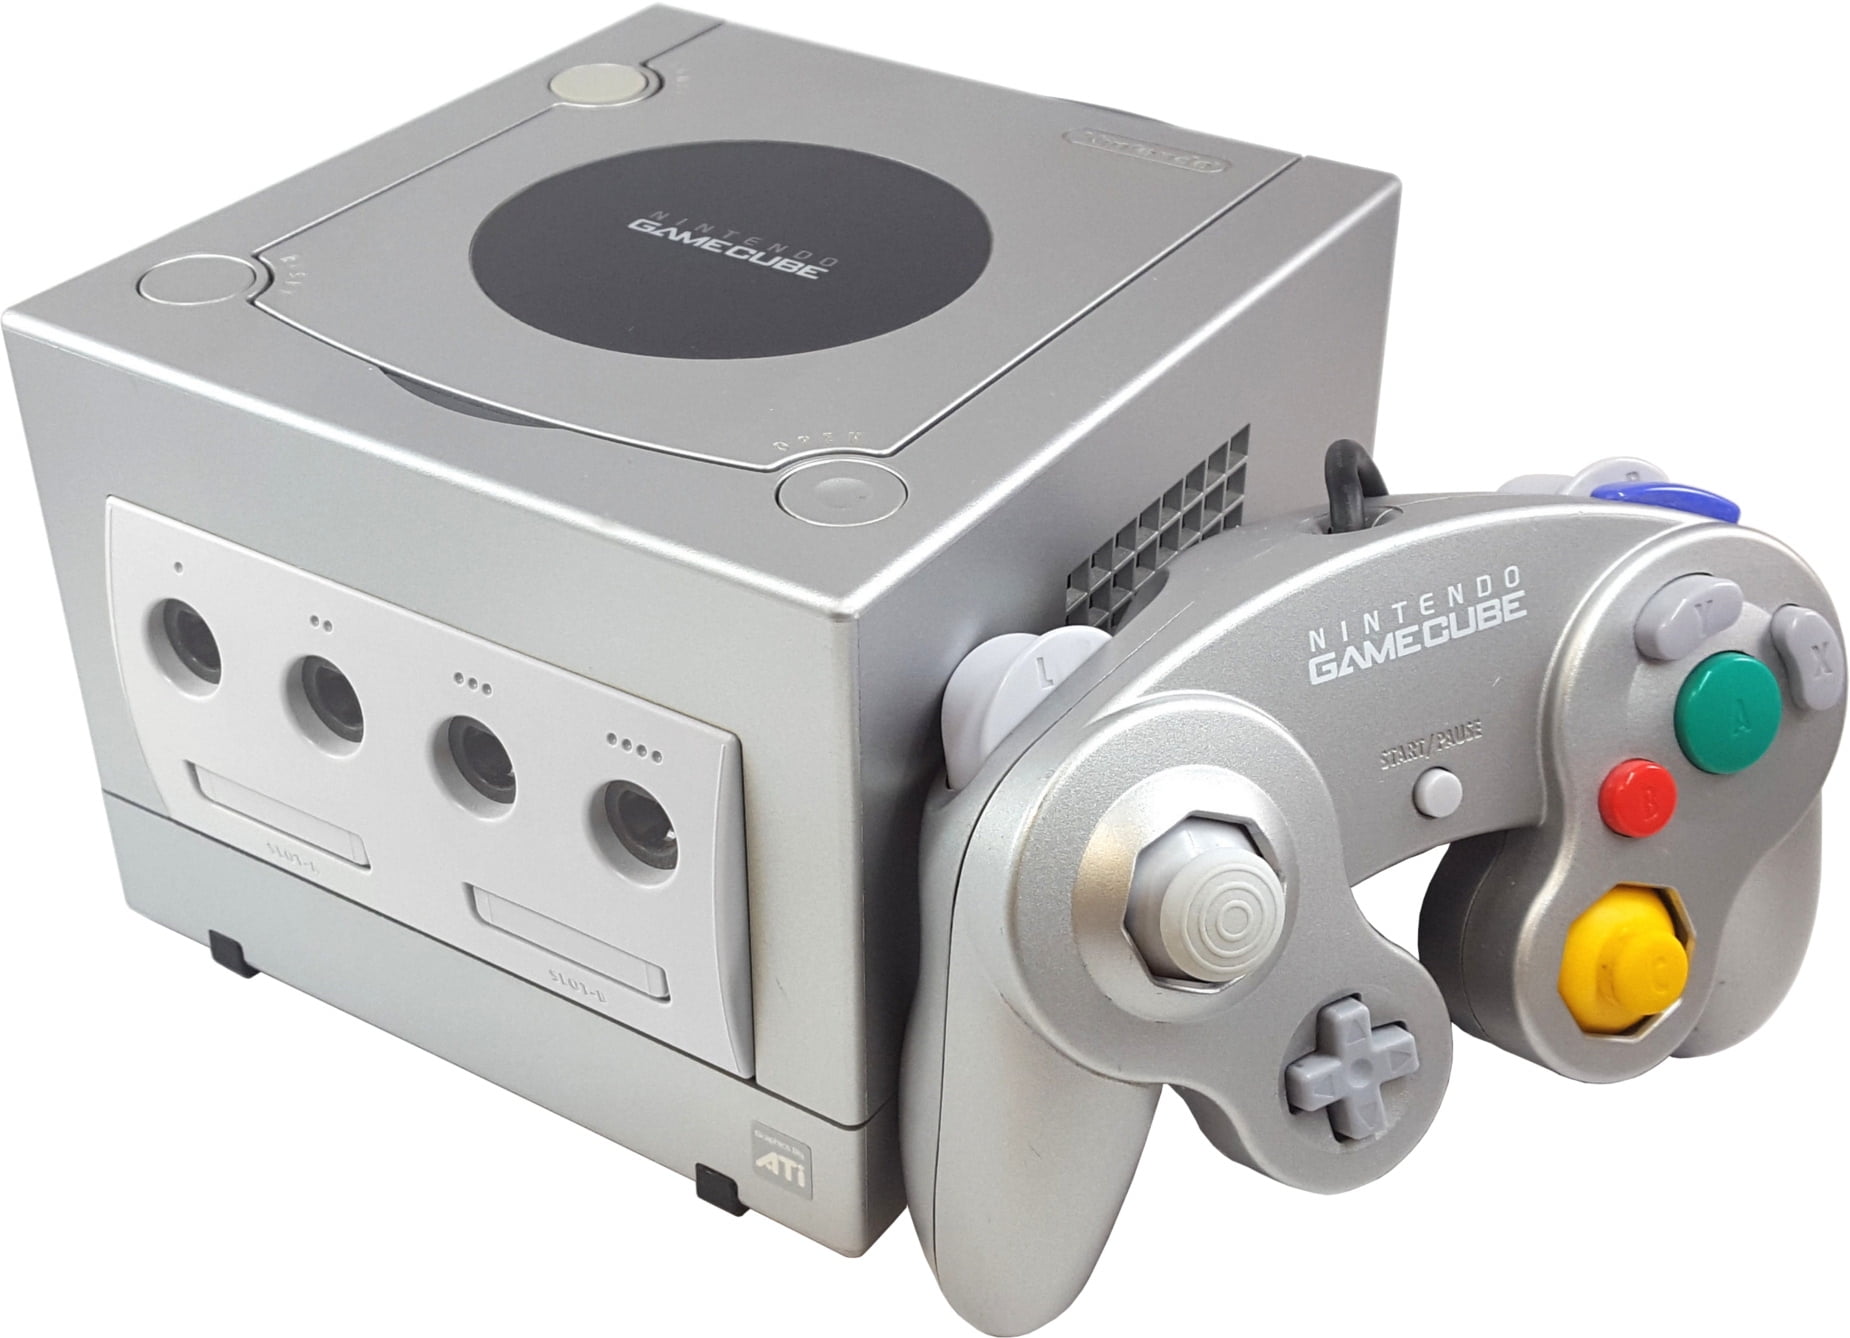 Restored Microsoft Original Xbox Video Game Console (Refurbished